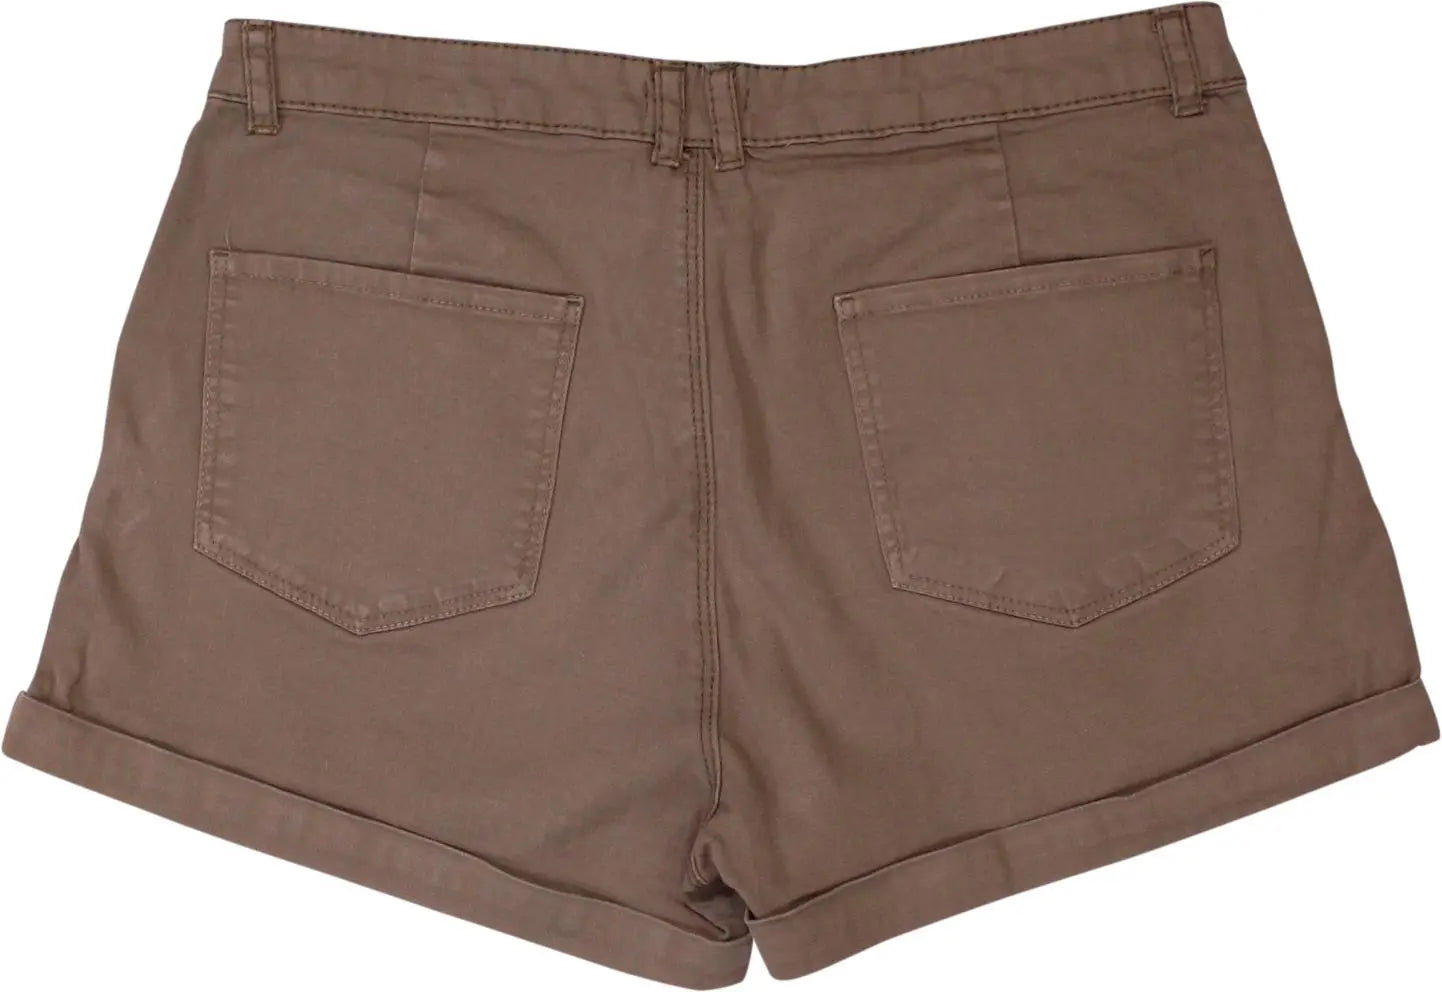 Bershka - Denim Shorts- ThriftTale.com - Vintage and second handclothing